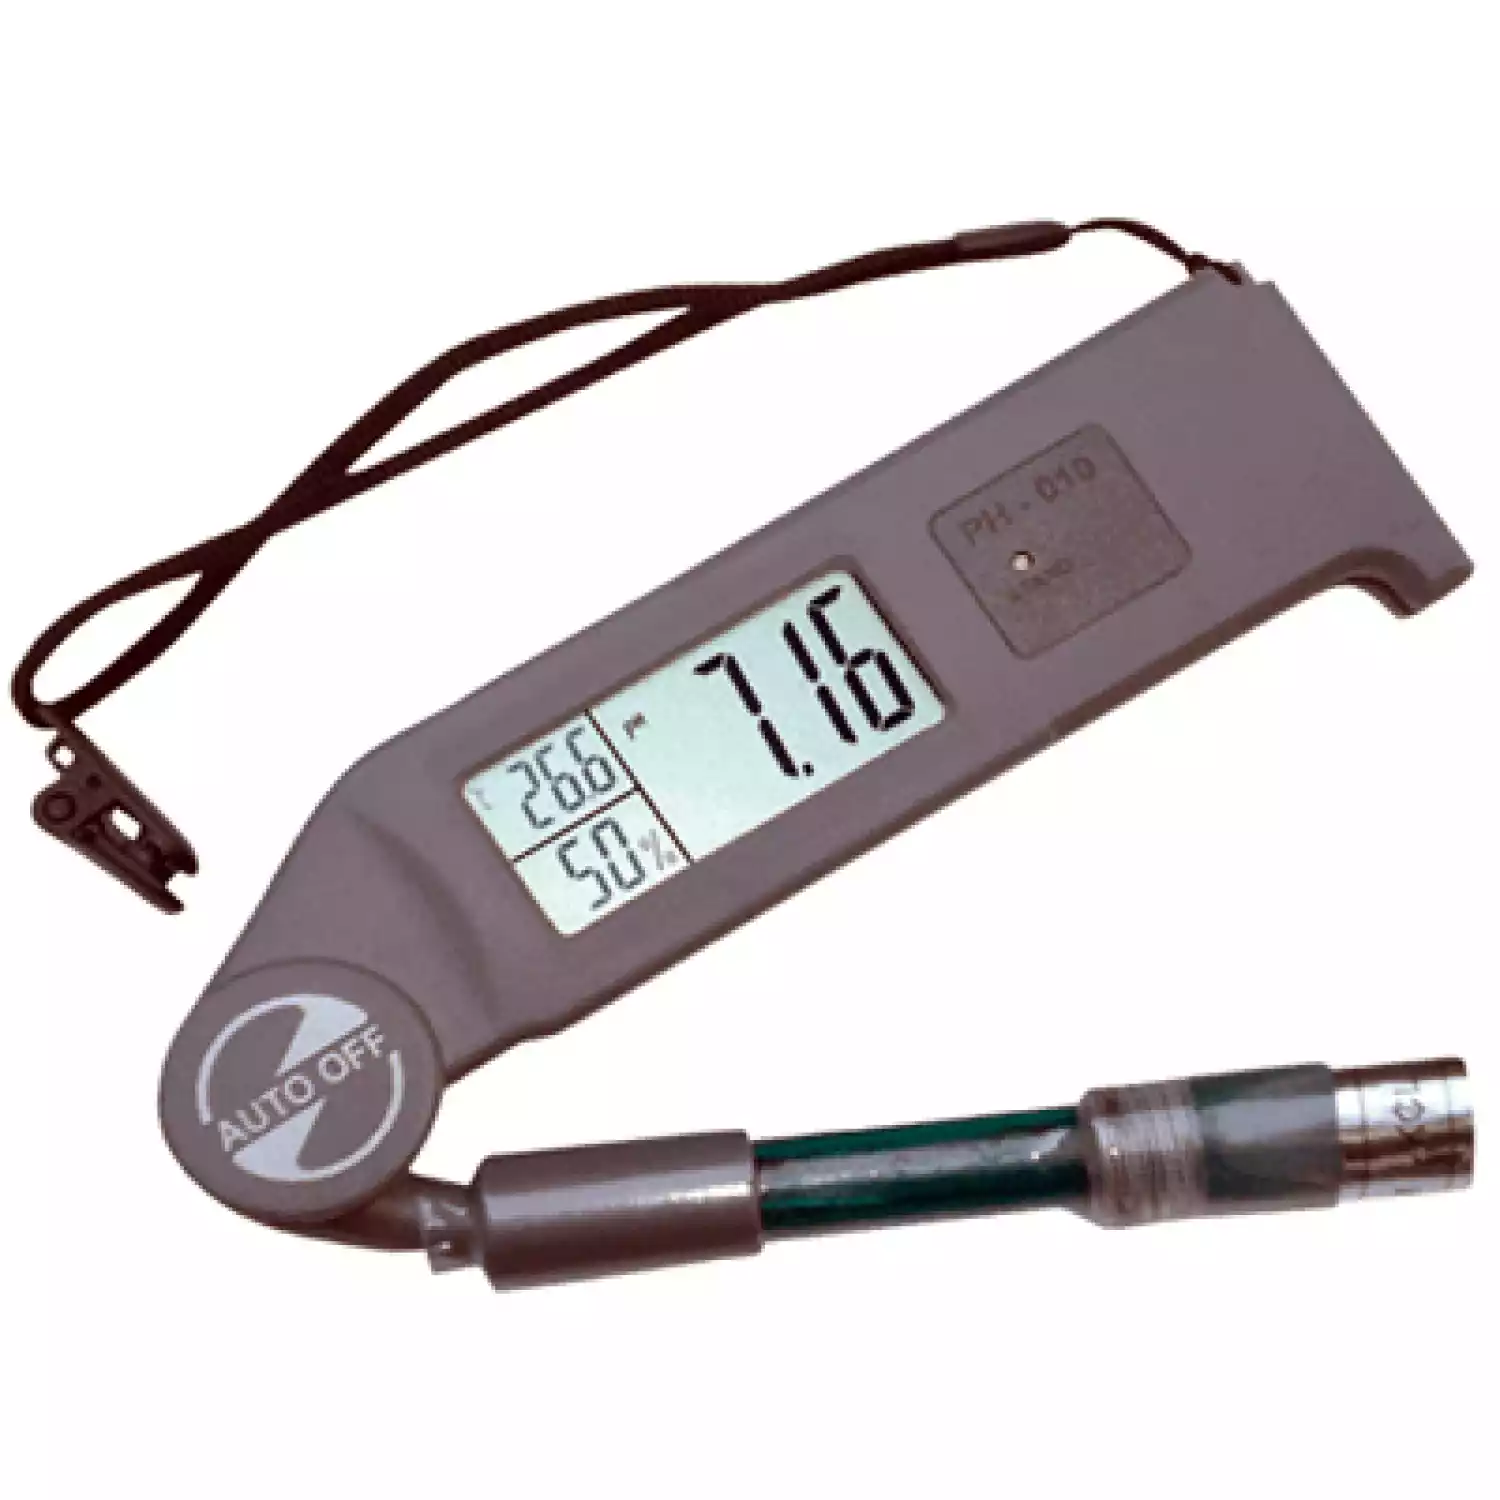 Складной pH-метр, термометр, гигрометр KL-0101 - 1